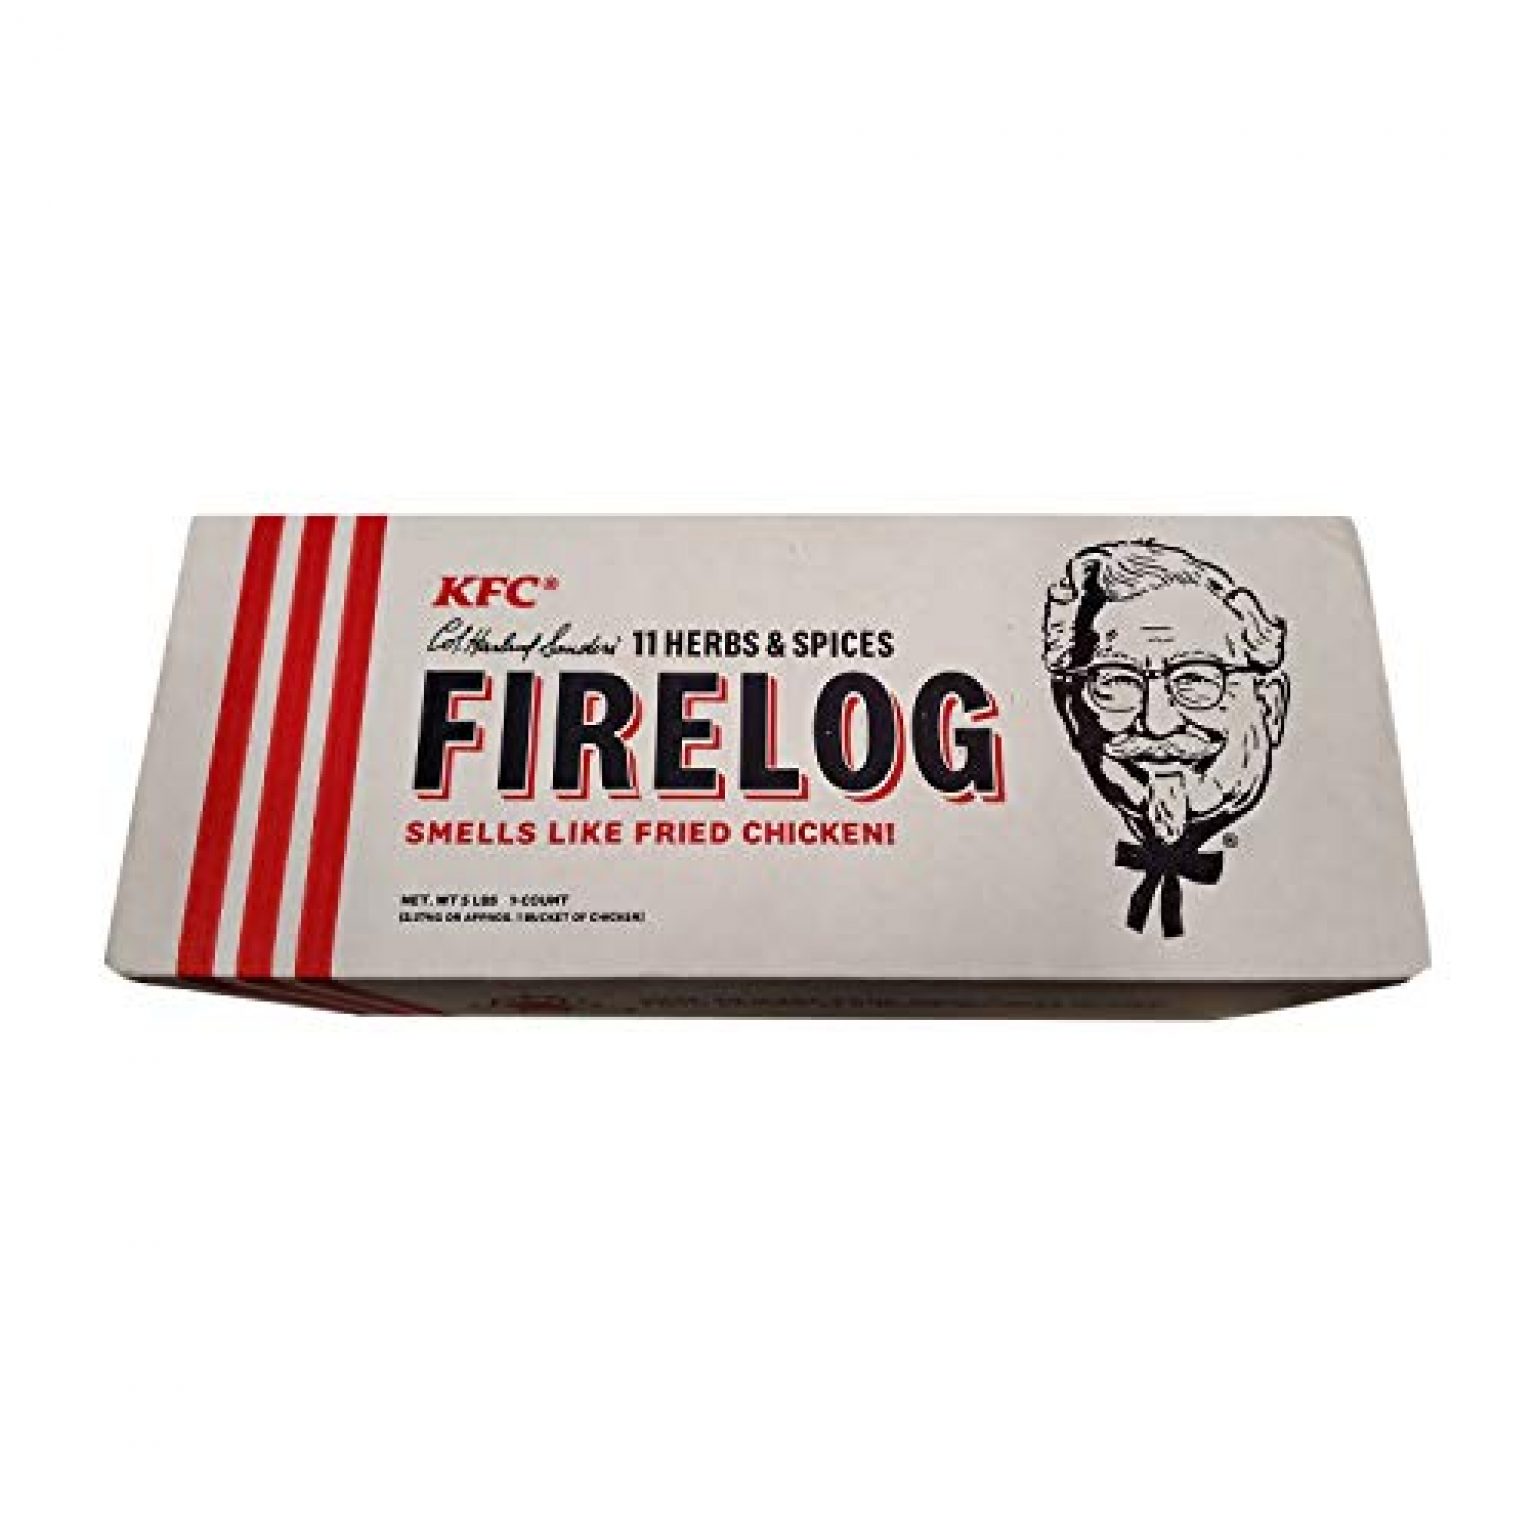 KFC Fire Log Real Fried Chicken Scented Fire Starter Yinz Buy